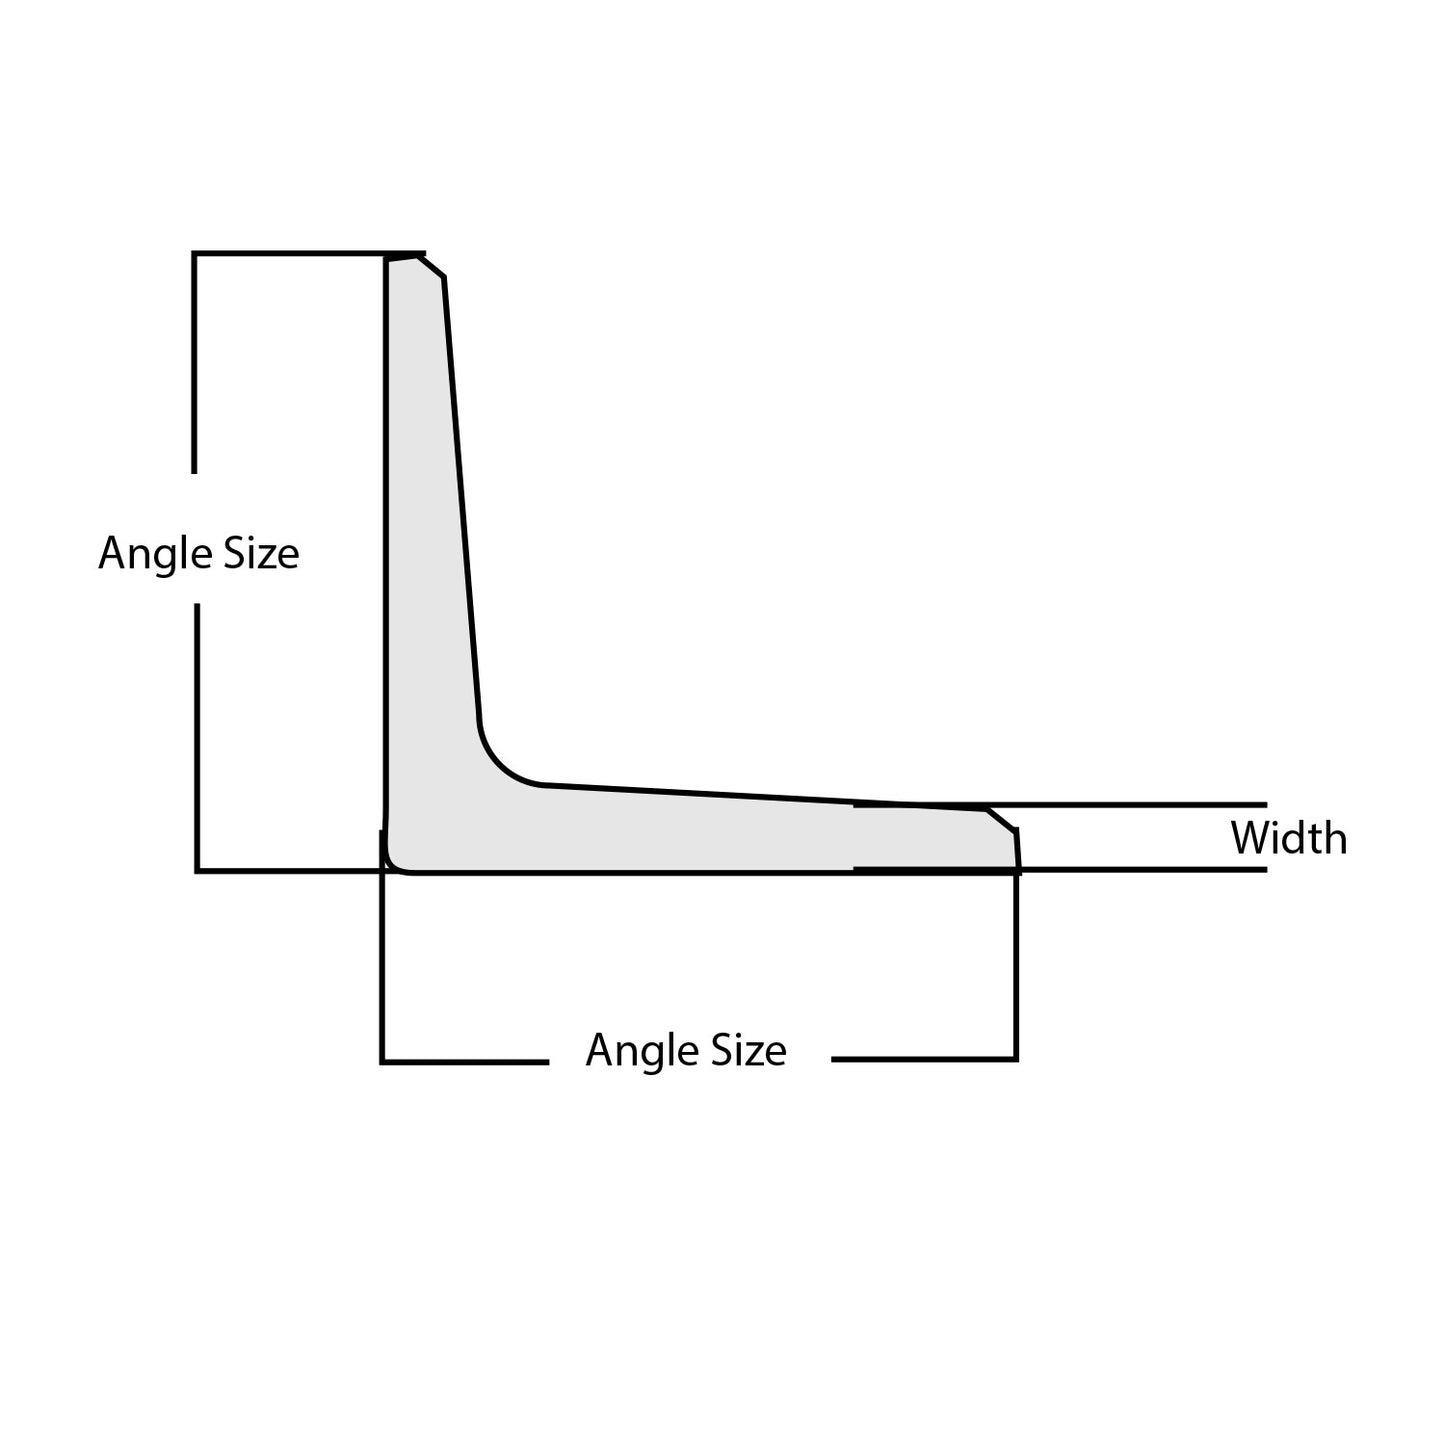 6" x 6" Aluminum Angle - Thickness 3/8